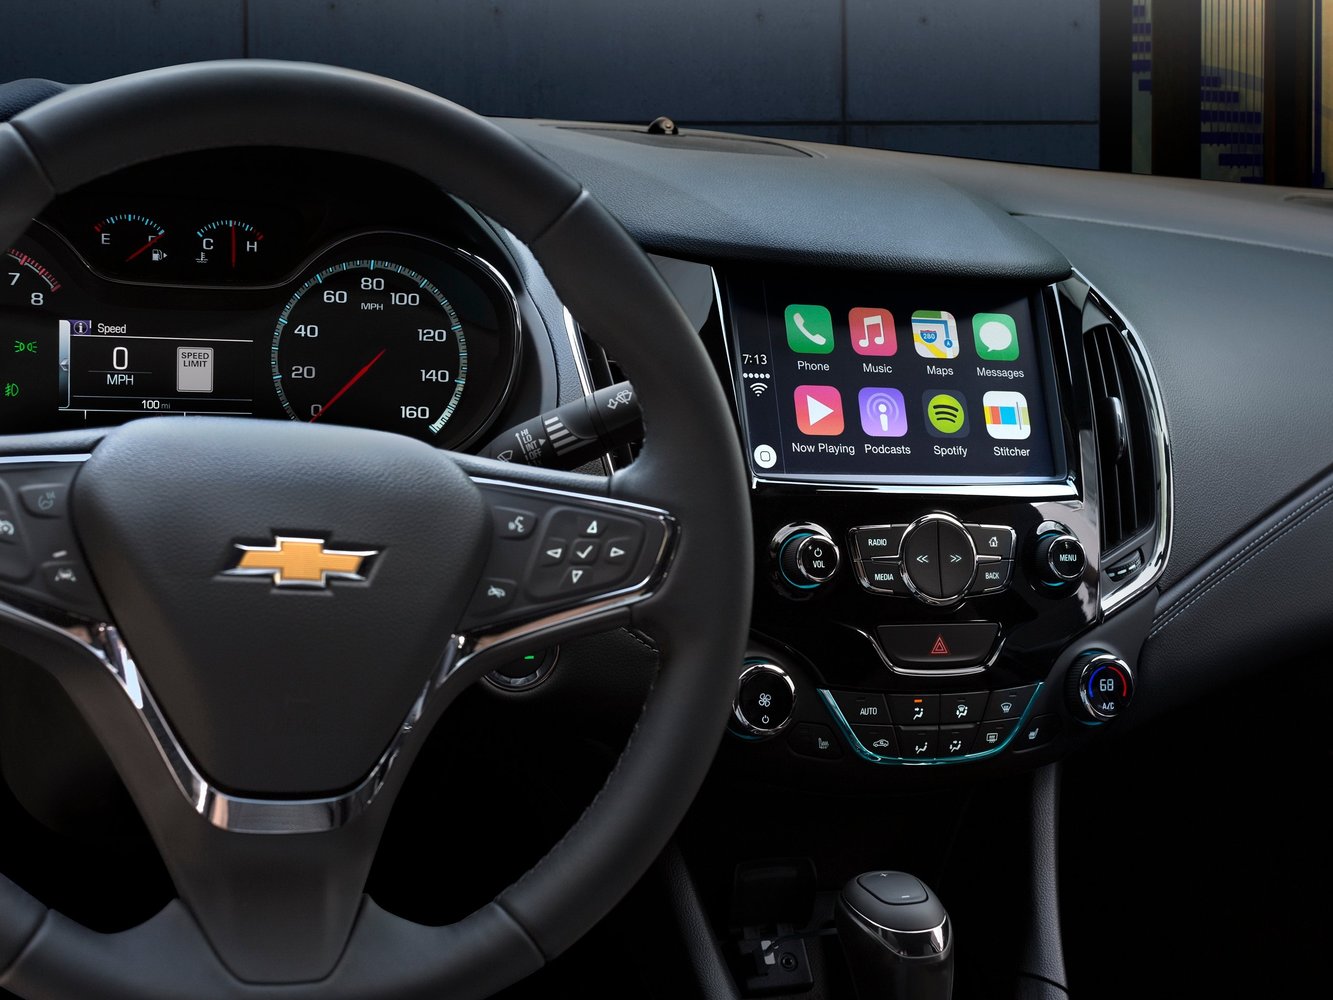 седан Chevrolet Cruze 2015 - 2016г выпуска модификация 1.4 AT (153 л.с.)